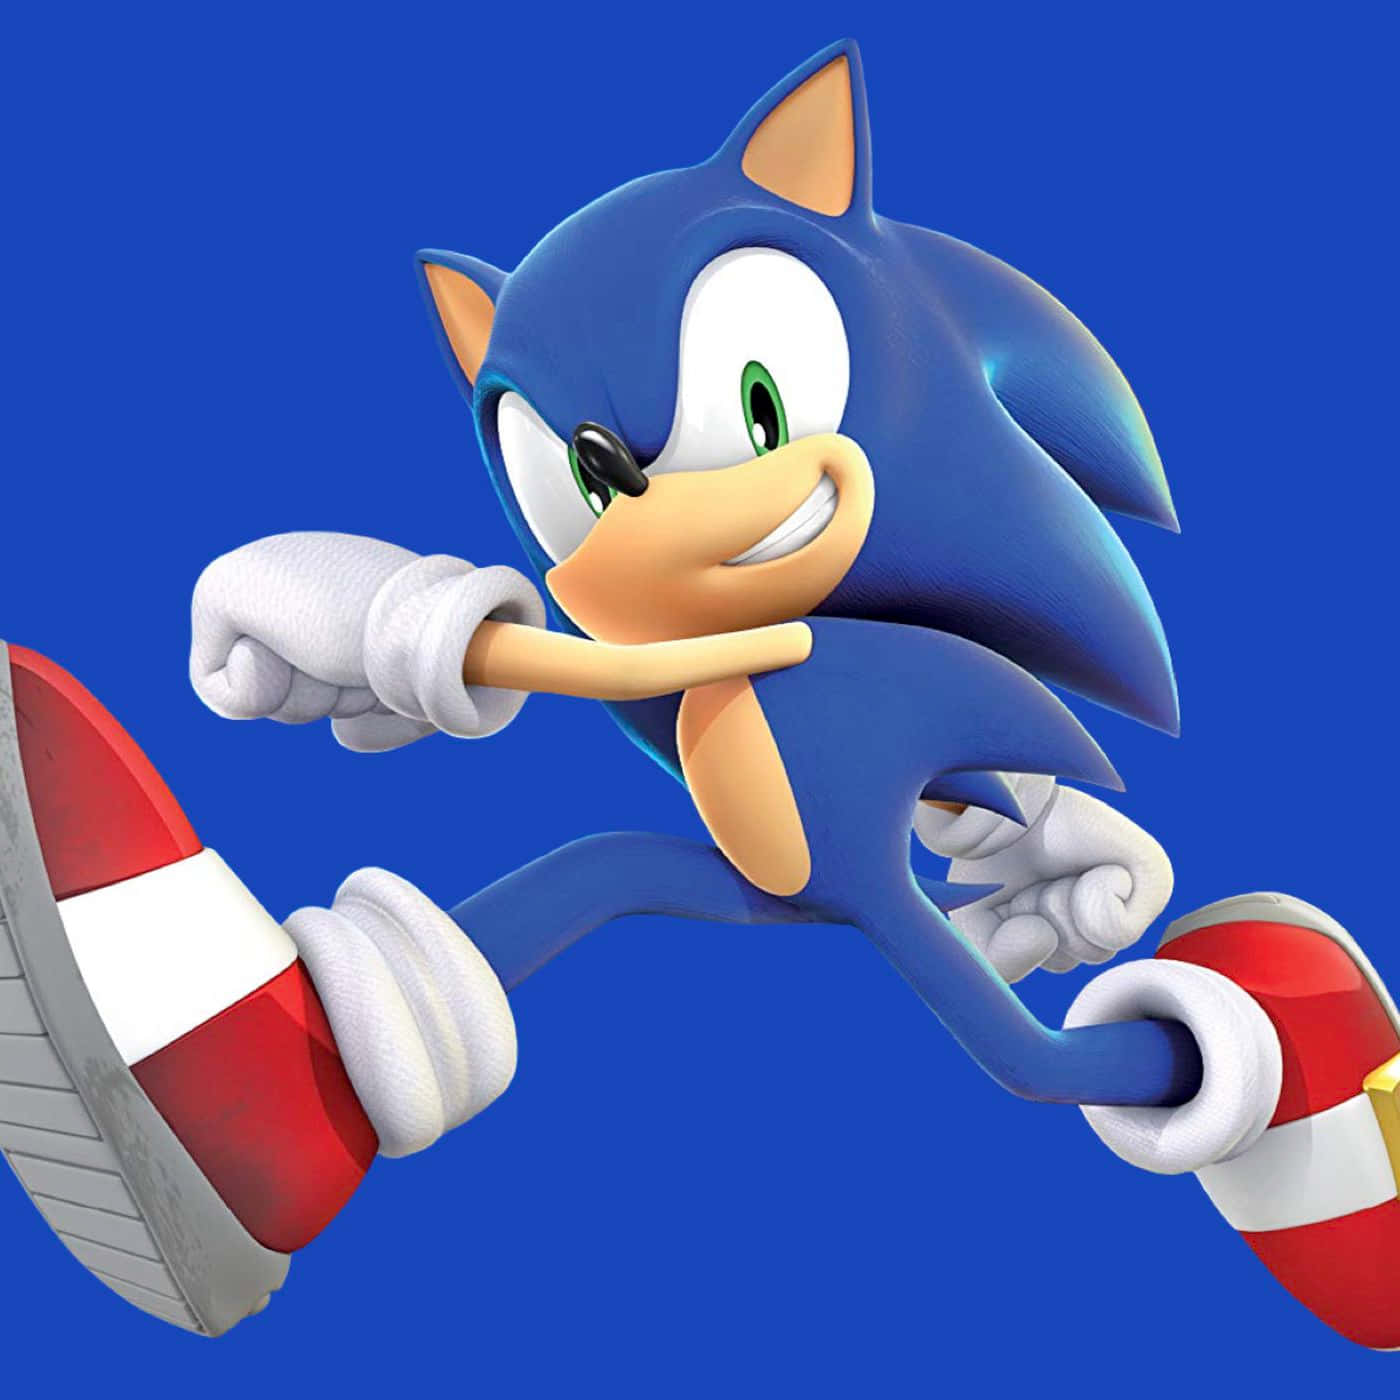 Sonic The Hedgehog running through Sonic World